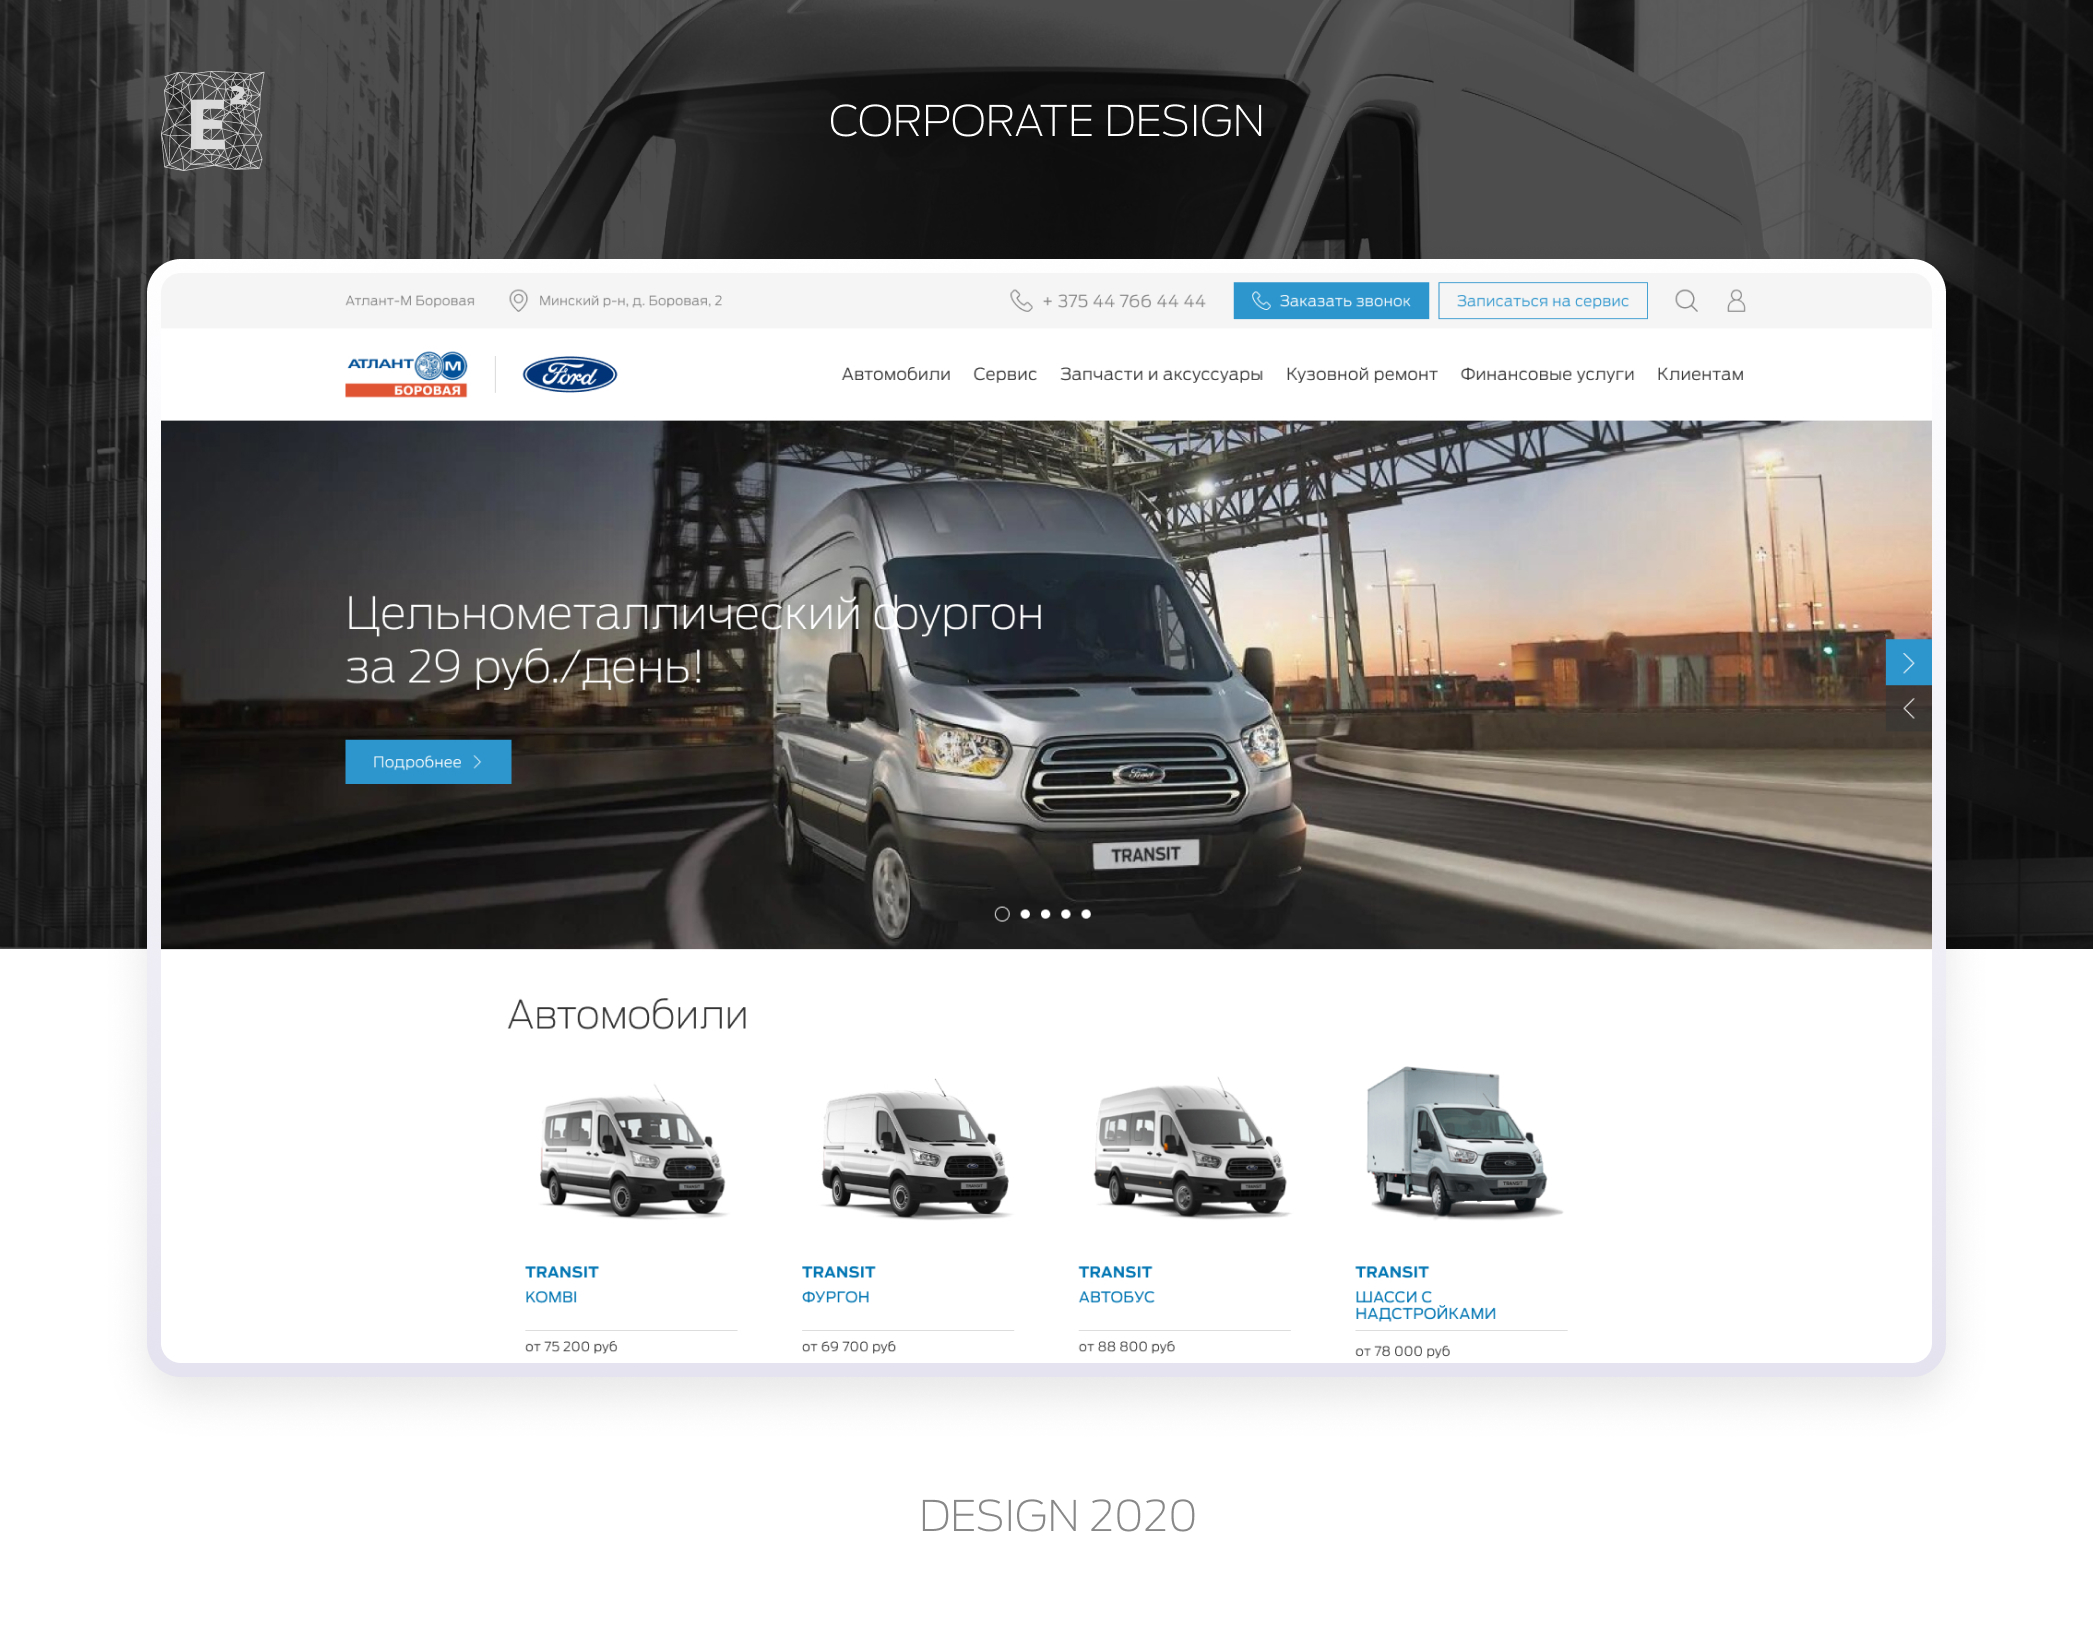 Atlant-M Borovaya Ford | Corporate website